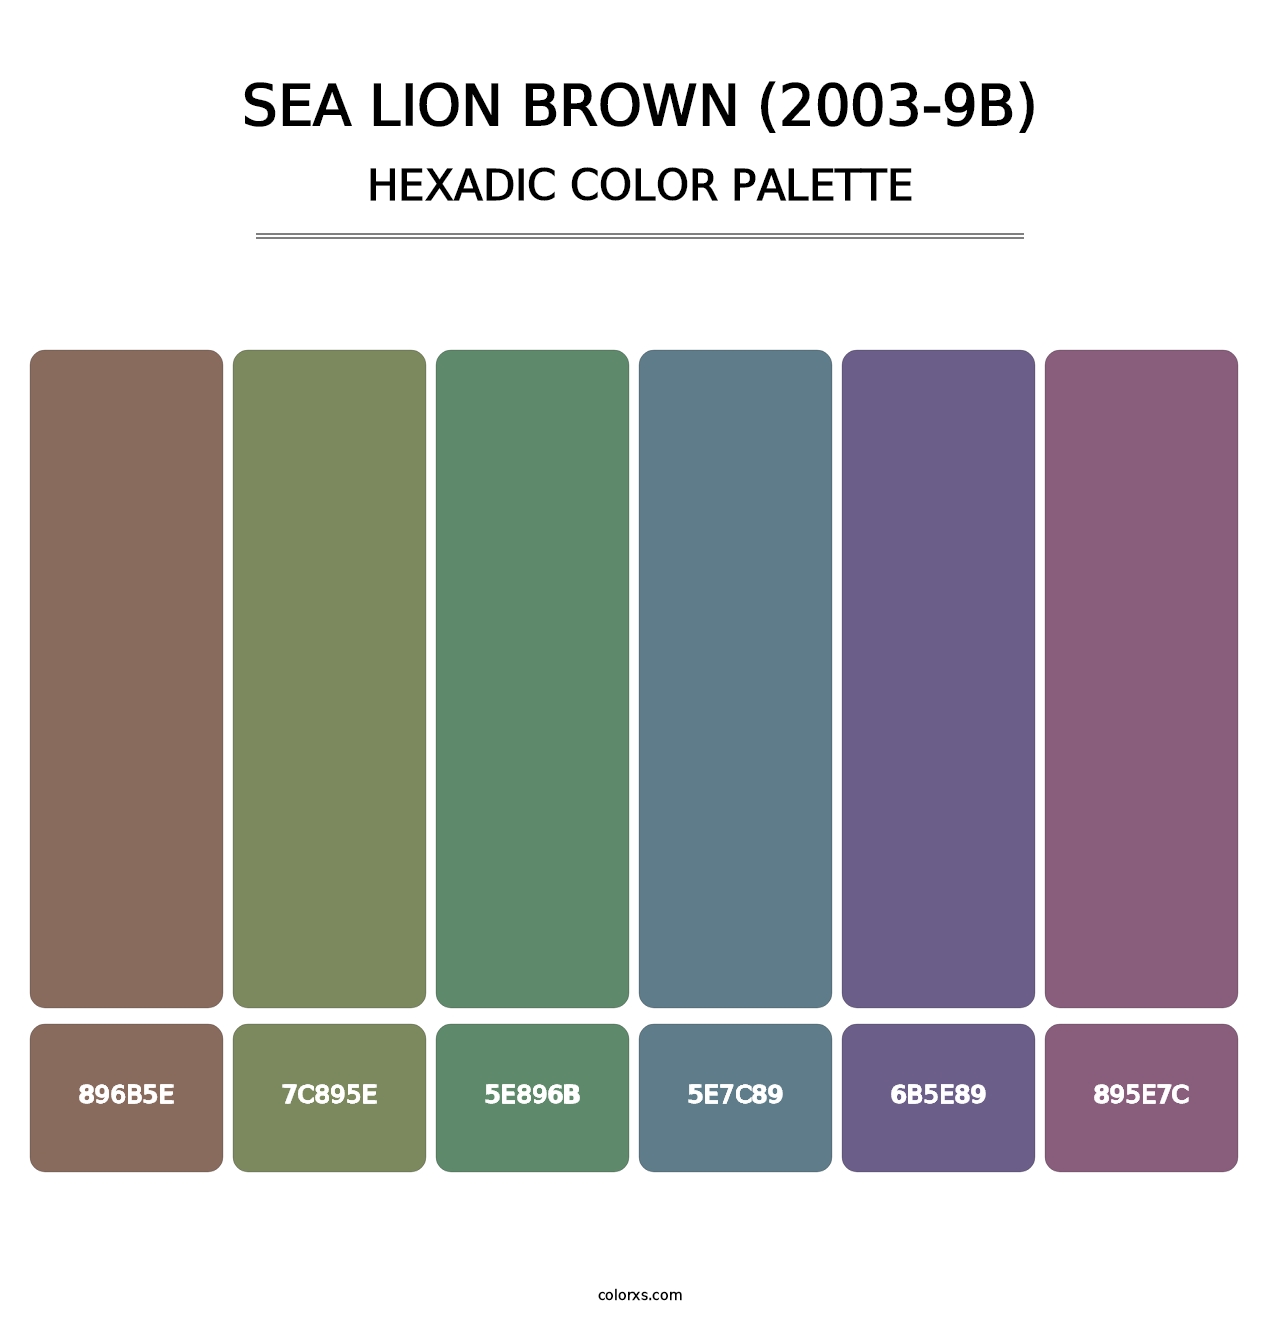 Sea Lion Brown (2003-9B) - Hexadic Color Palette